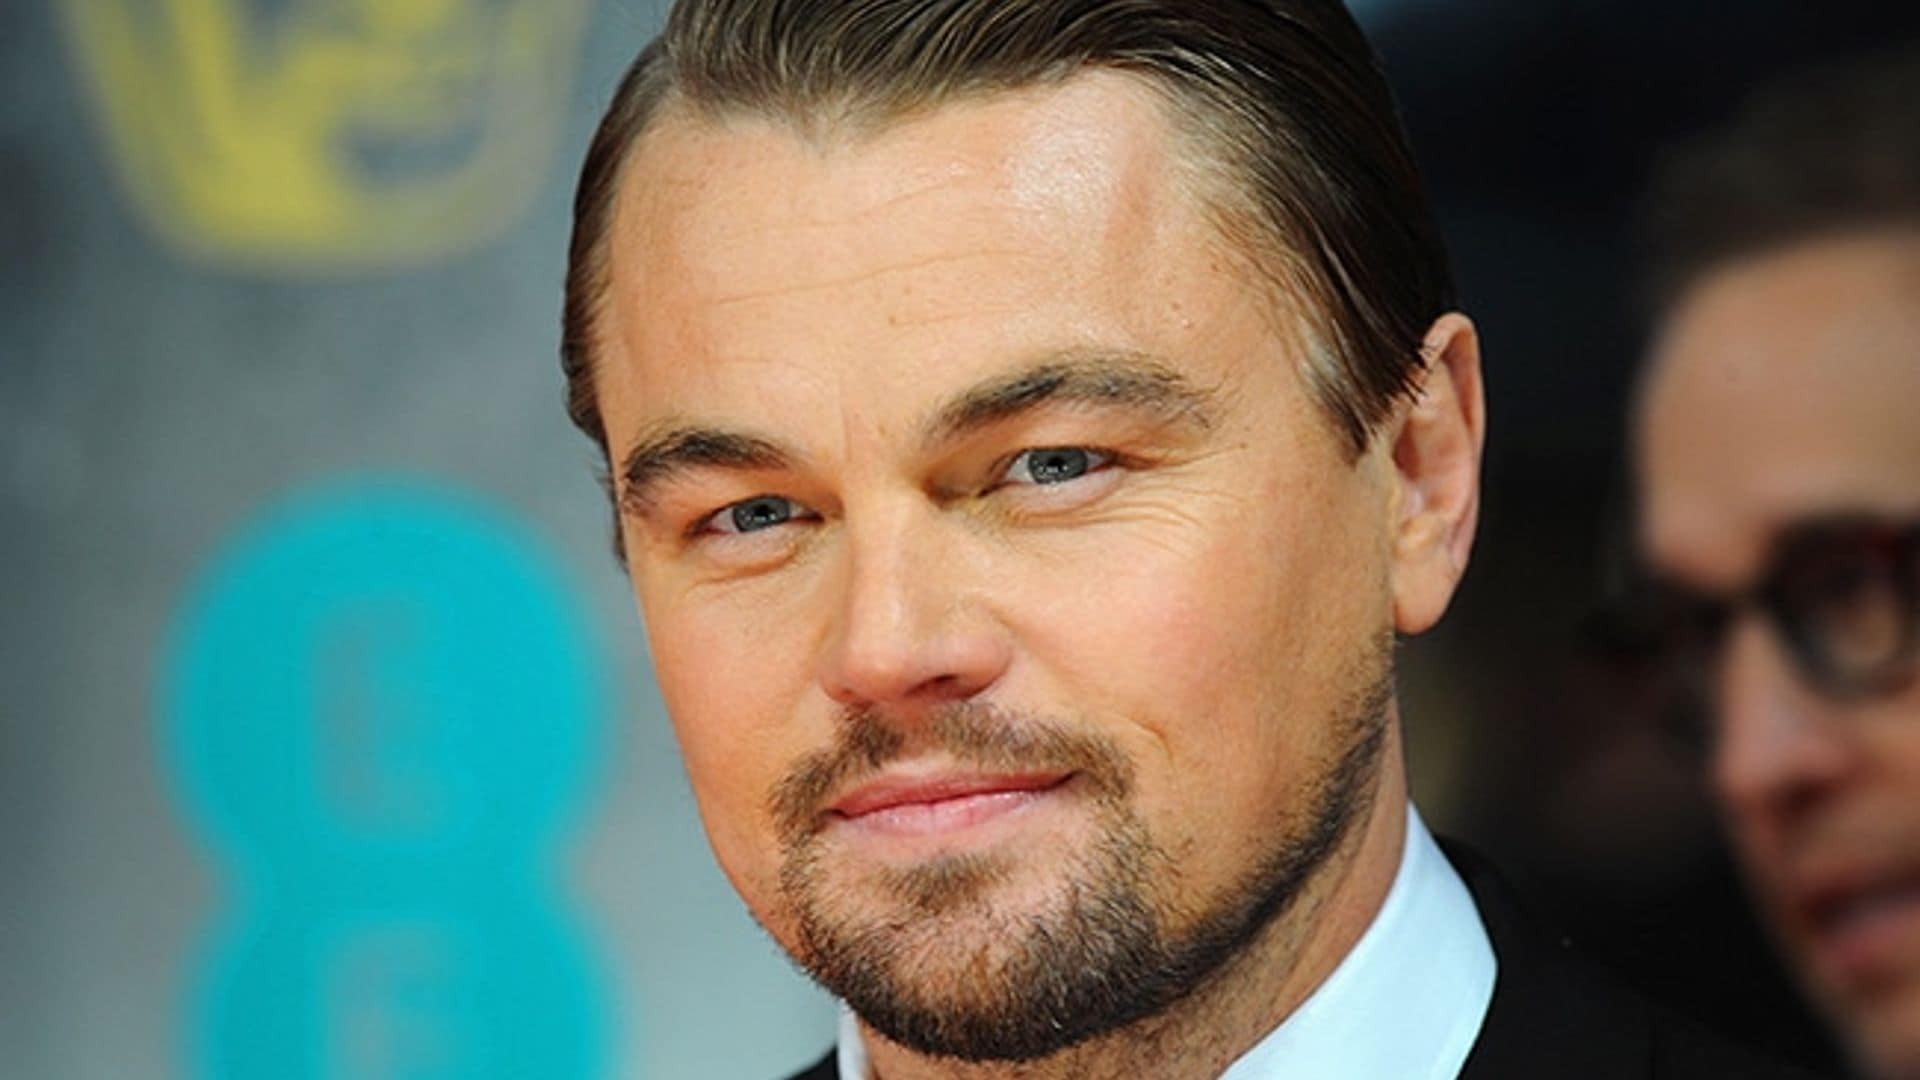 Oscars 2016: Leonardo DiCaprio's life and passions off the screen